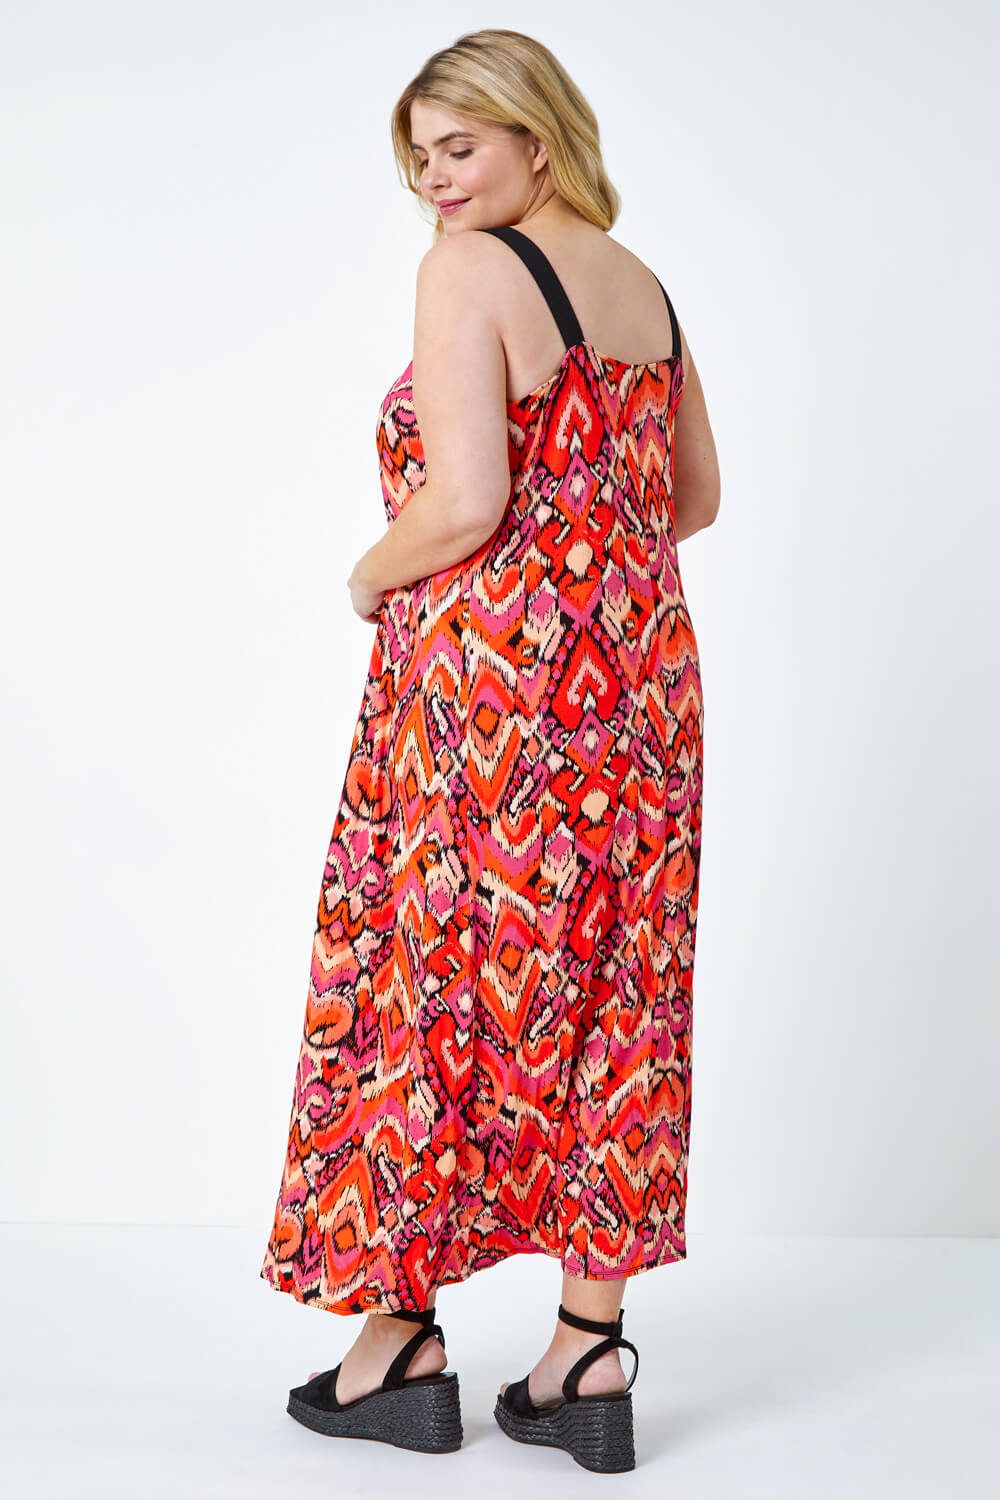 ORANGE Curve Contrast Print Stretch Midi Dress, Image 3 of 5